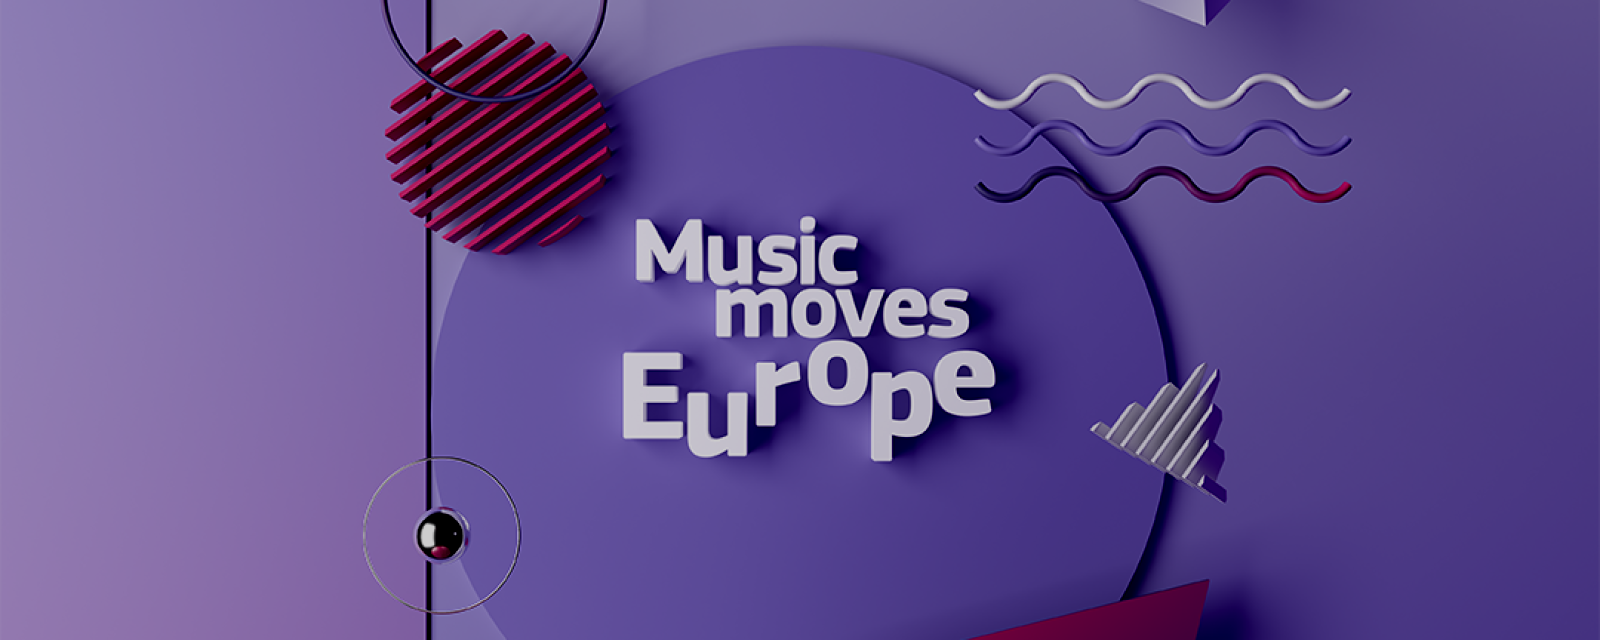 musicmoveseurope_formation_appel2019